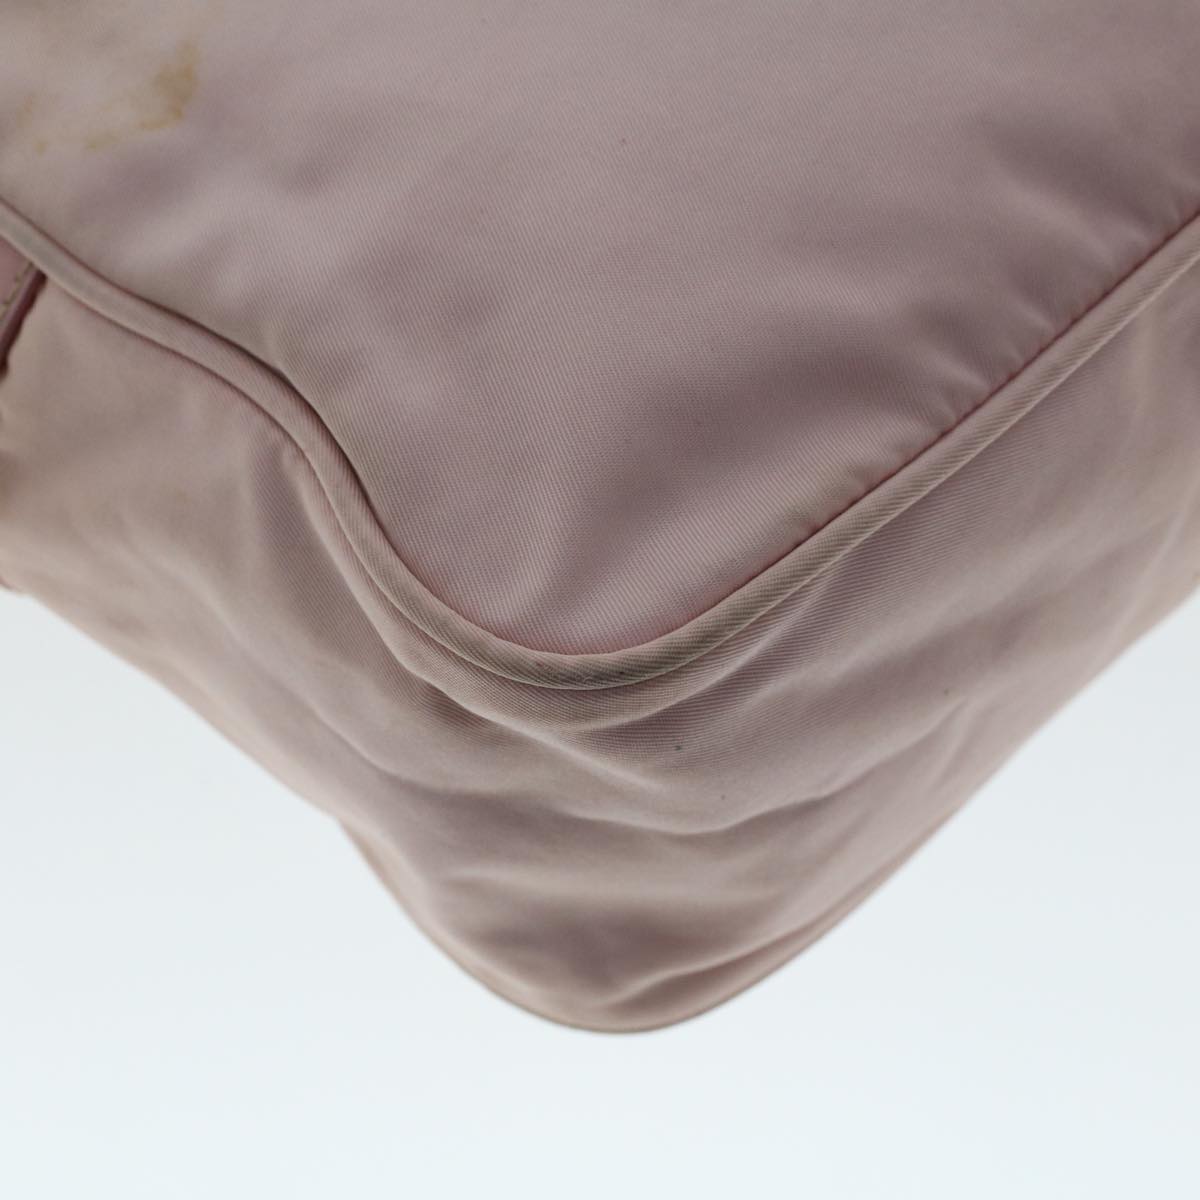 PRADA Shoulder Bag Nylon Pink Auth 48006